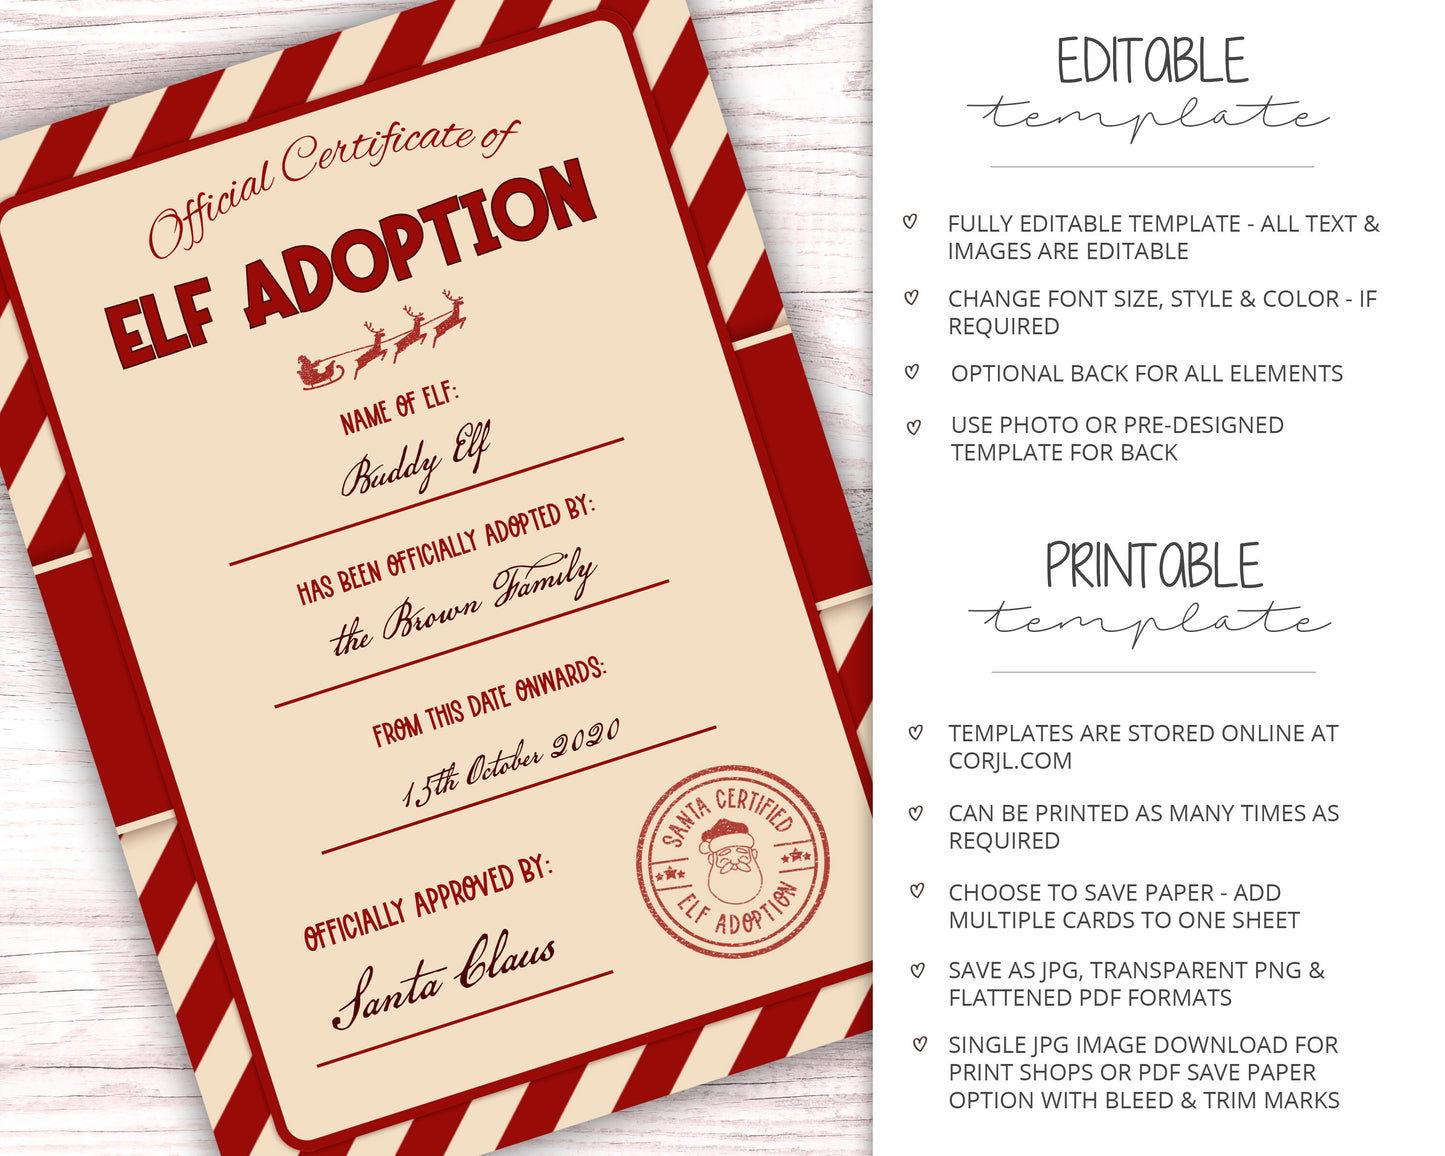 PRINTABLE Elf Adoption Certificate EDITABLE Instant Download DIY Editing Printable Elf Prop Ideas Elf Activity Elf Kit - PR0422